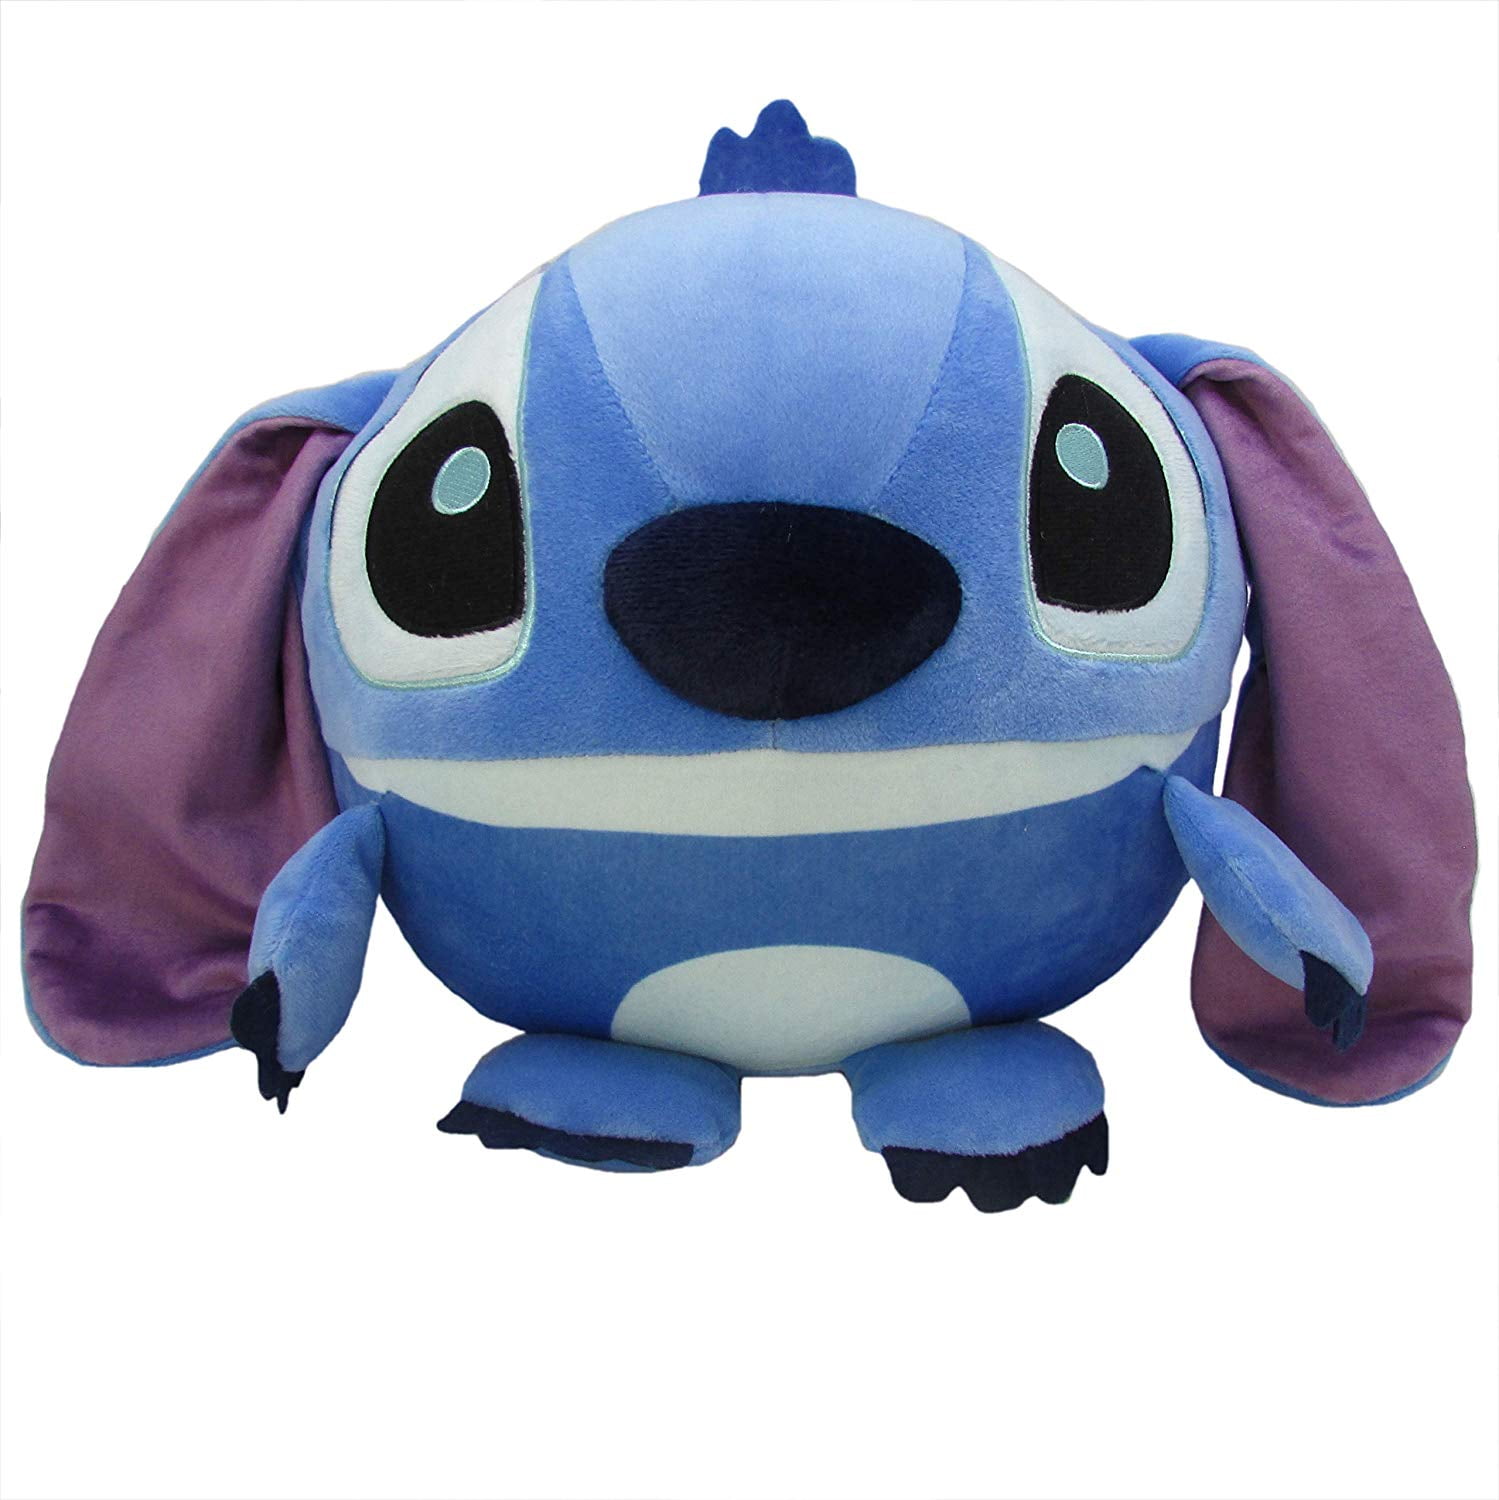 Disney Stitch Round Cuddle Pal Stuffed Animal Plush Toy, 10 Inches -  